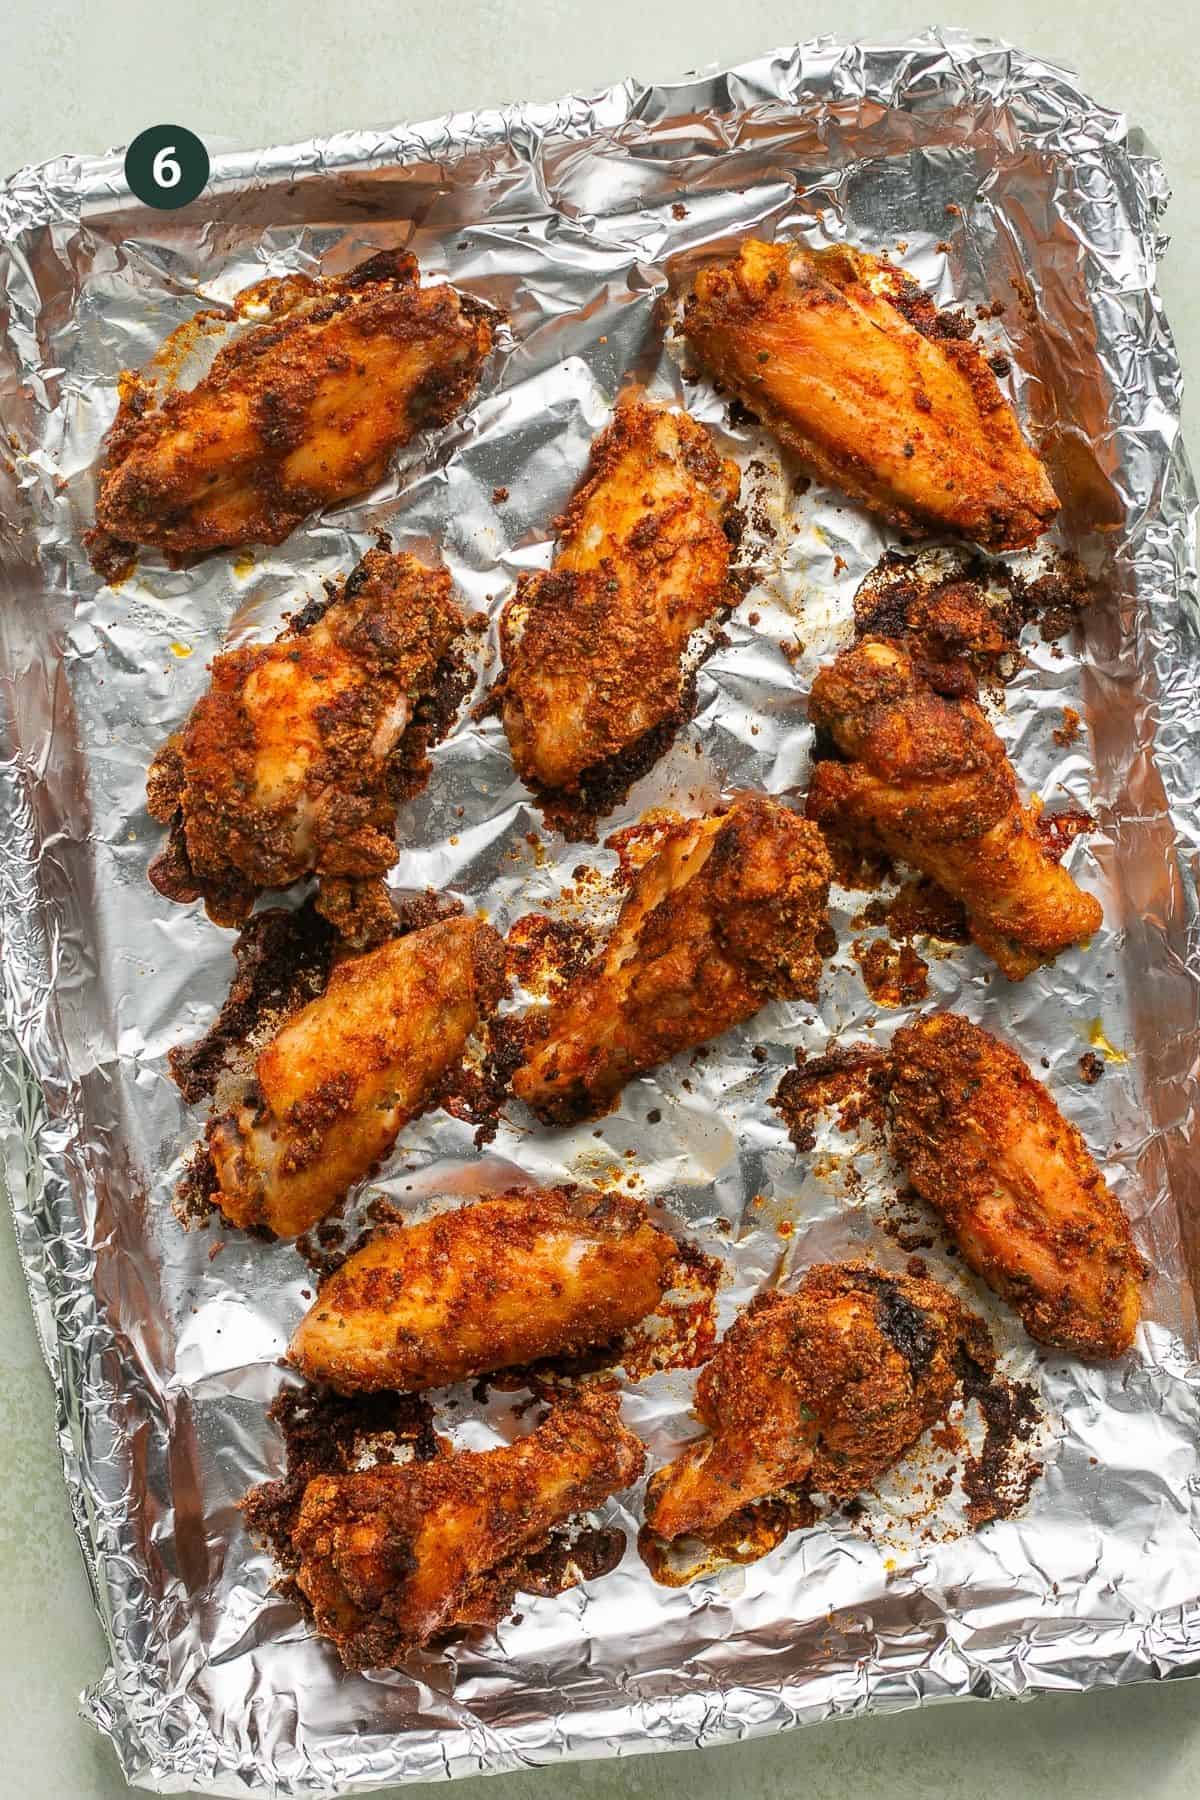 Freshly baked crispy seasoned wings on a foil lined baking sheet.